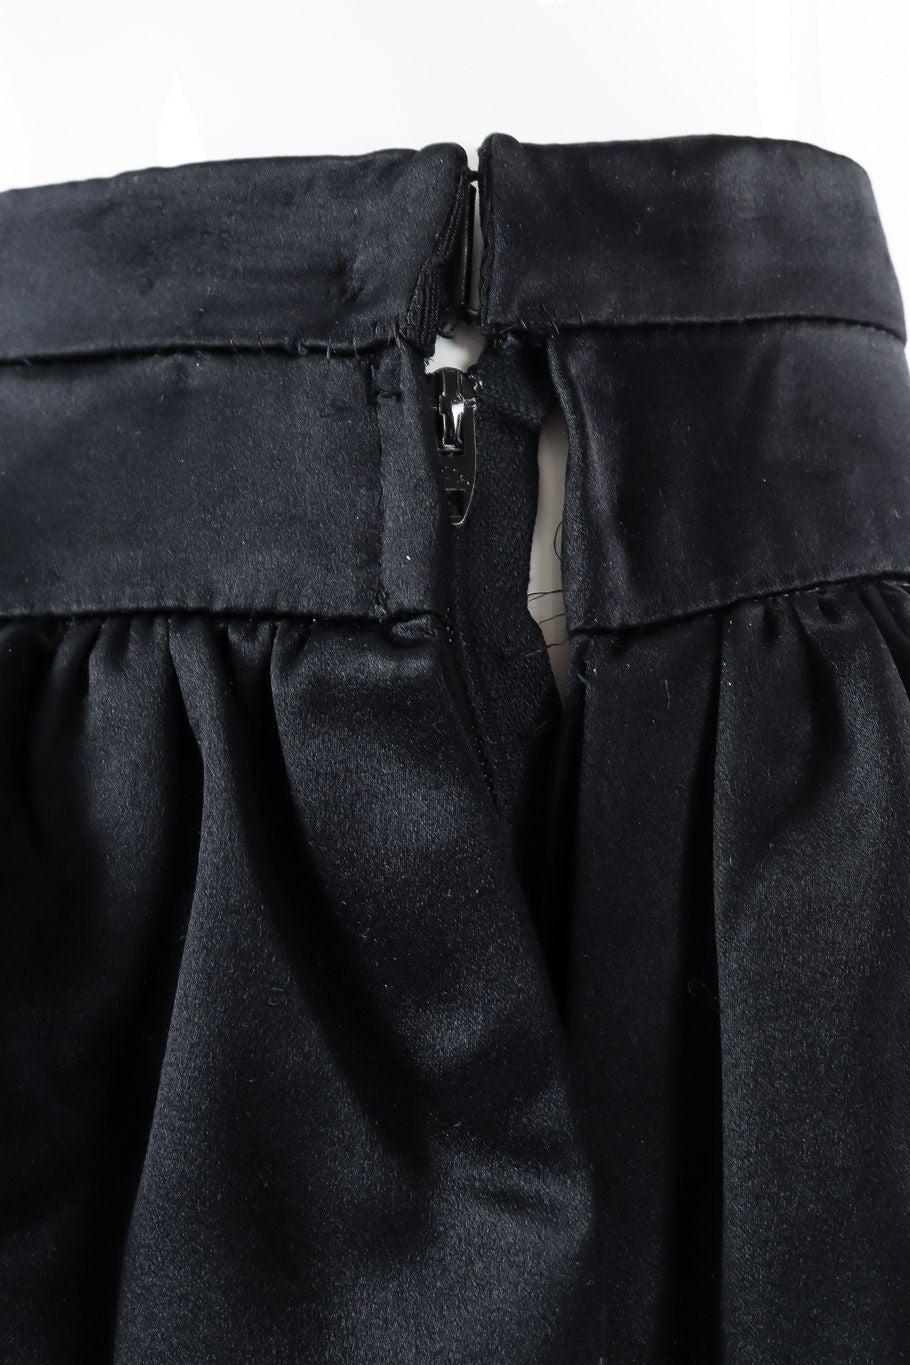 Valentino ruffle lace tiered skirt zipper flaw  @recessla